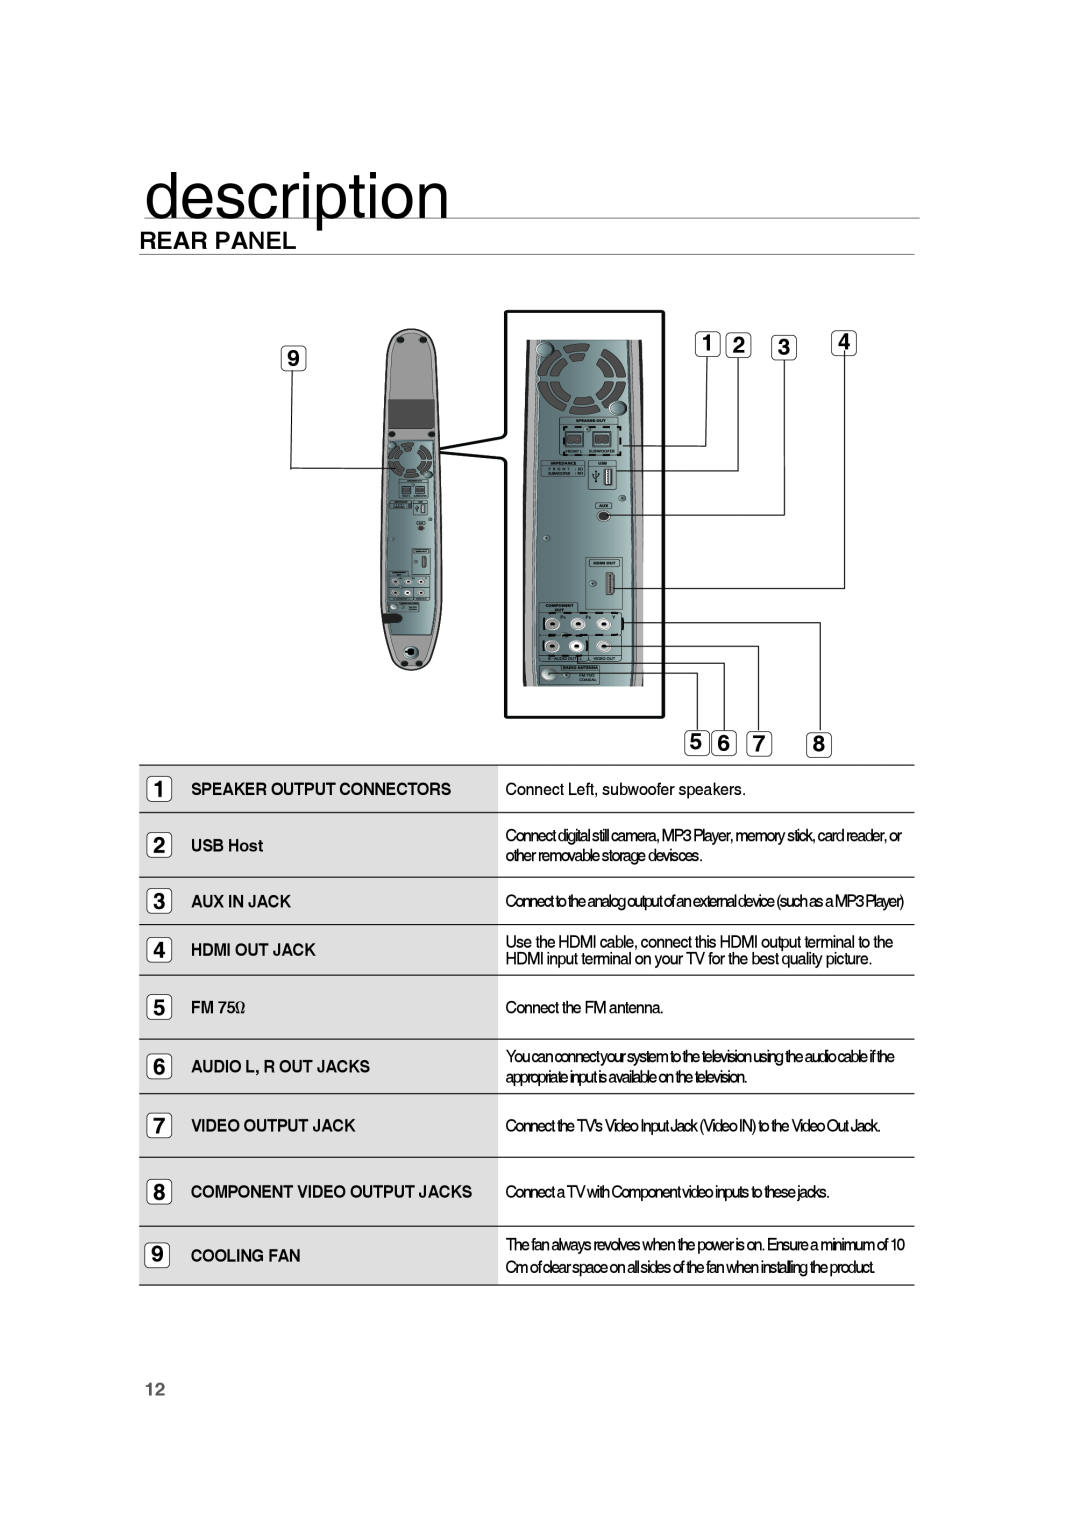 Samsung HE10T user manual Rear Panel, description, Speaker Output Connectors, USB Host, Aux In Jack, Hdmi Out Jack, FM 75Ω 